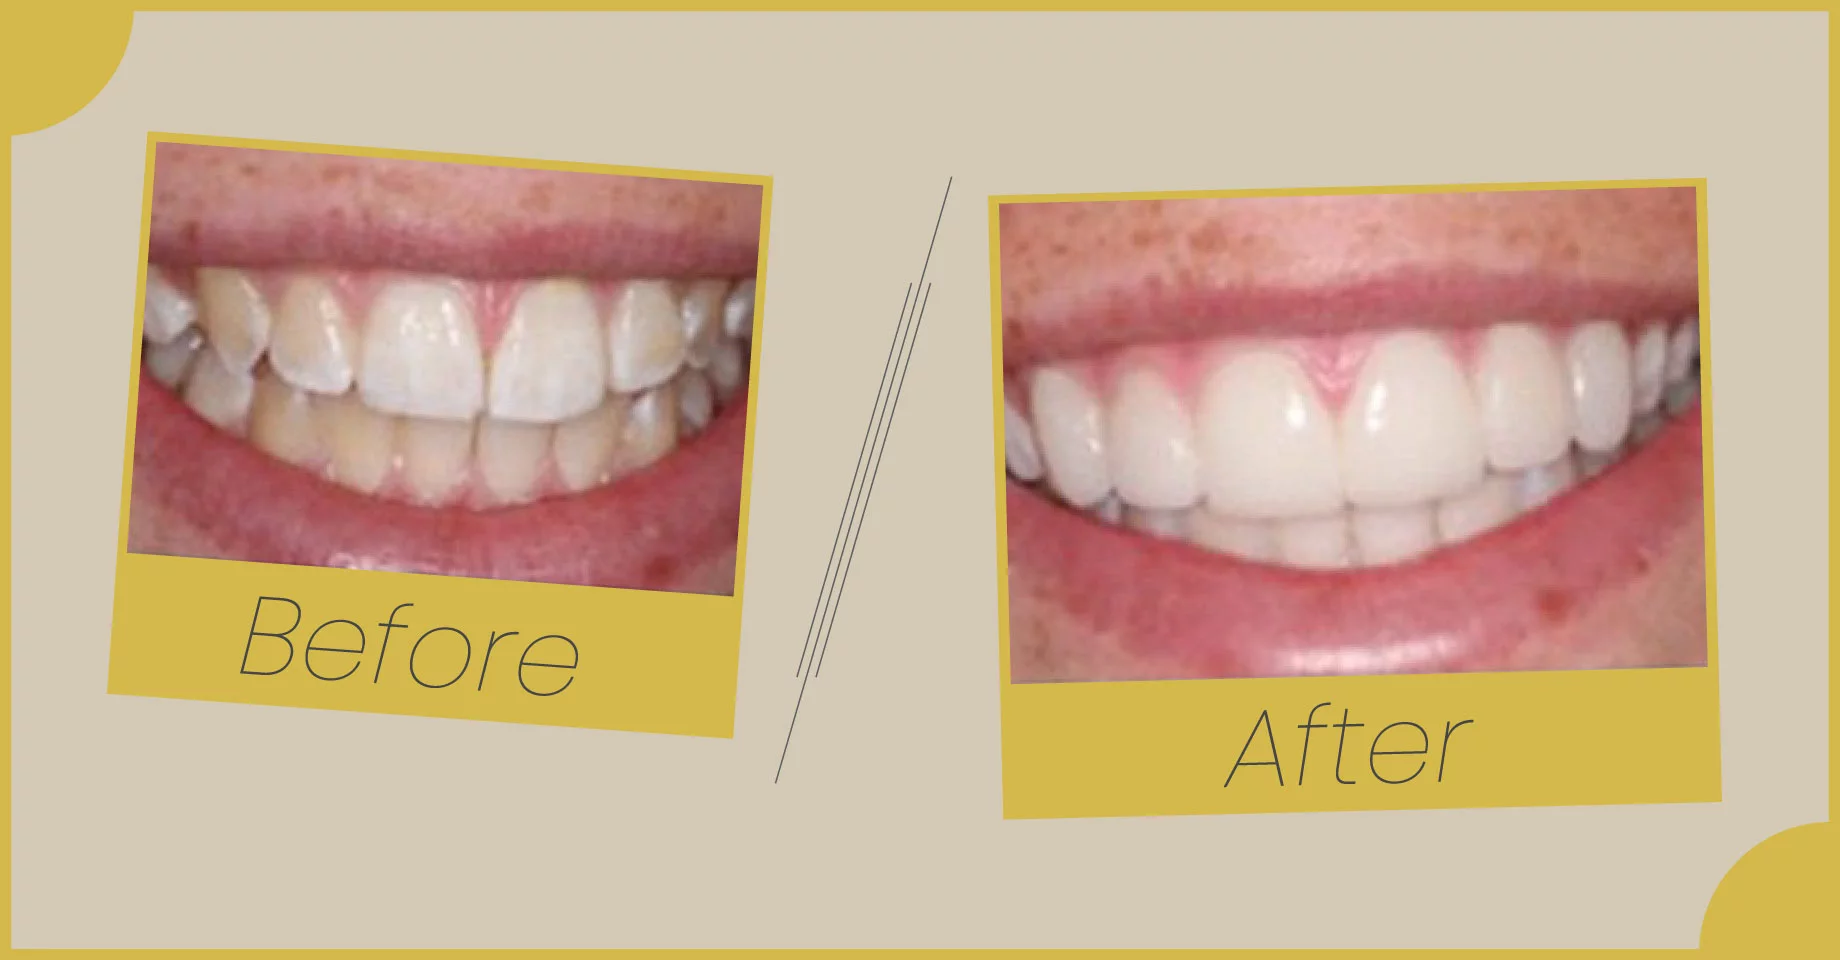 Transformation Results of Dental Care at Smile Saver Dental